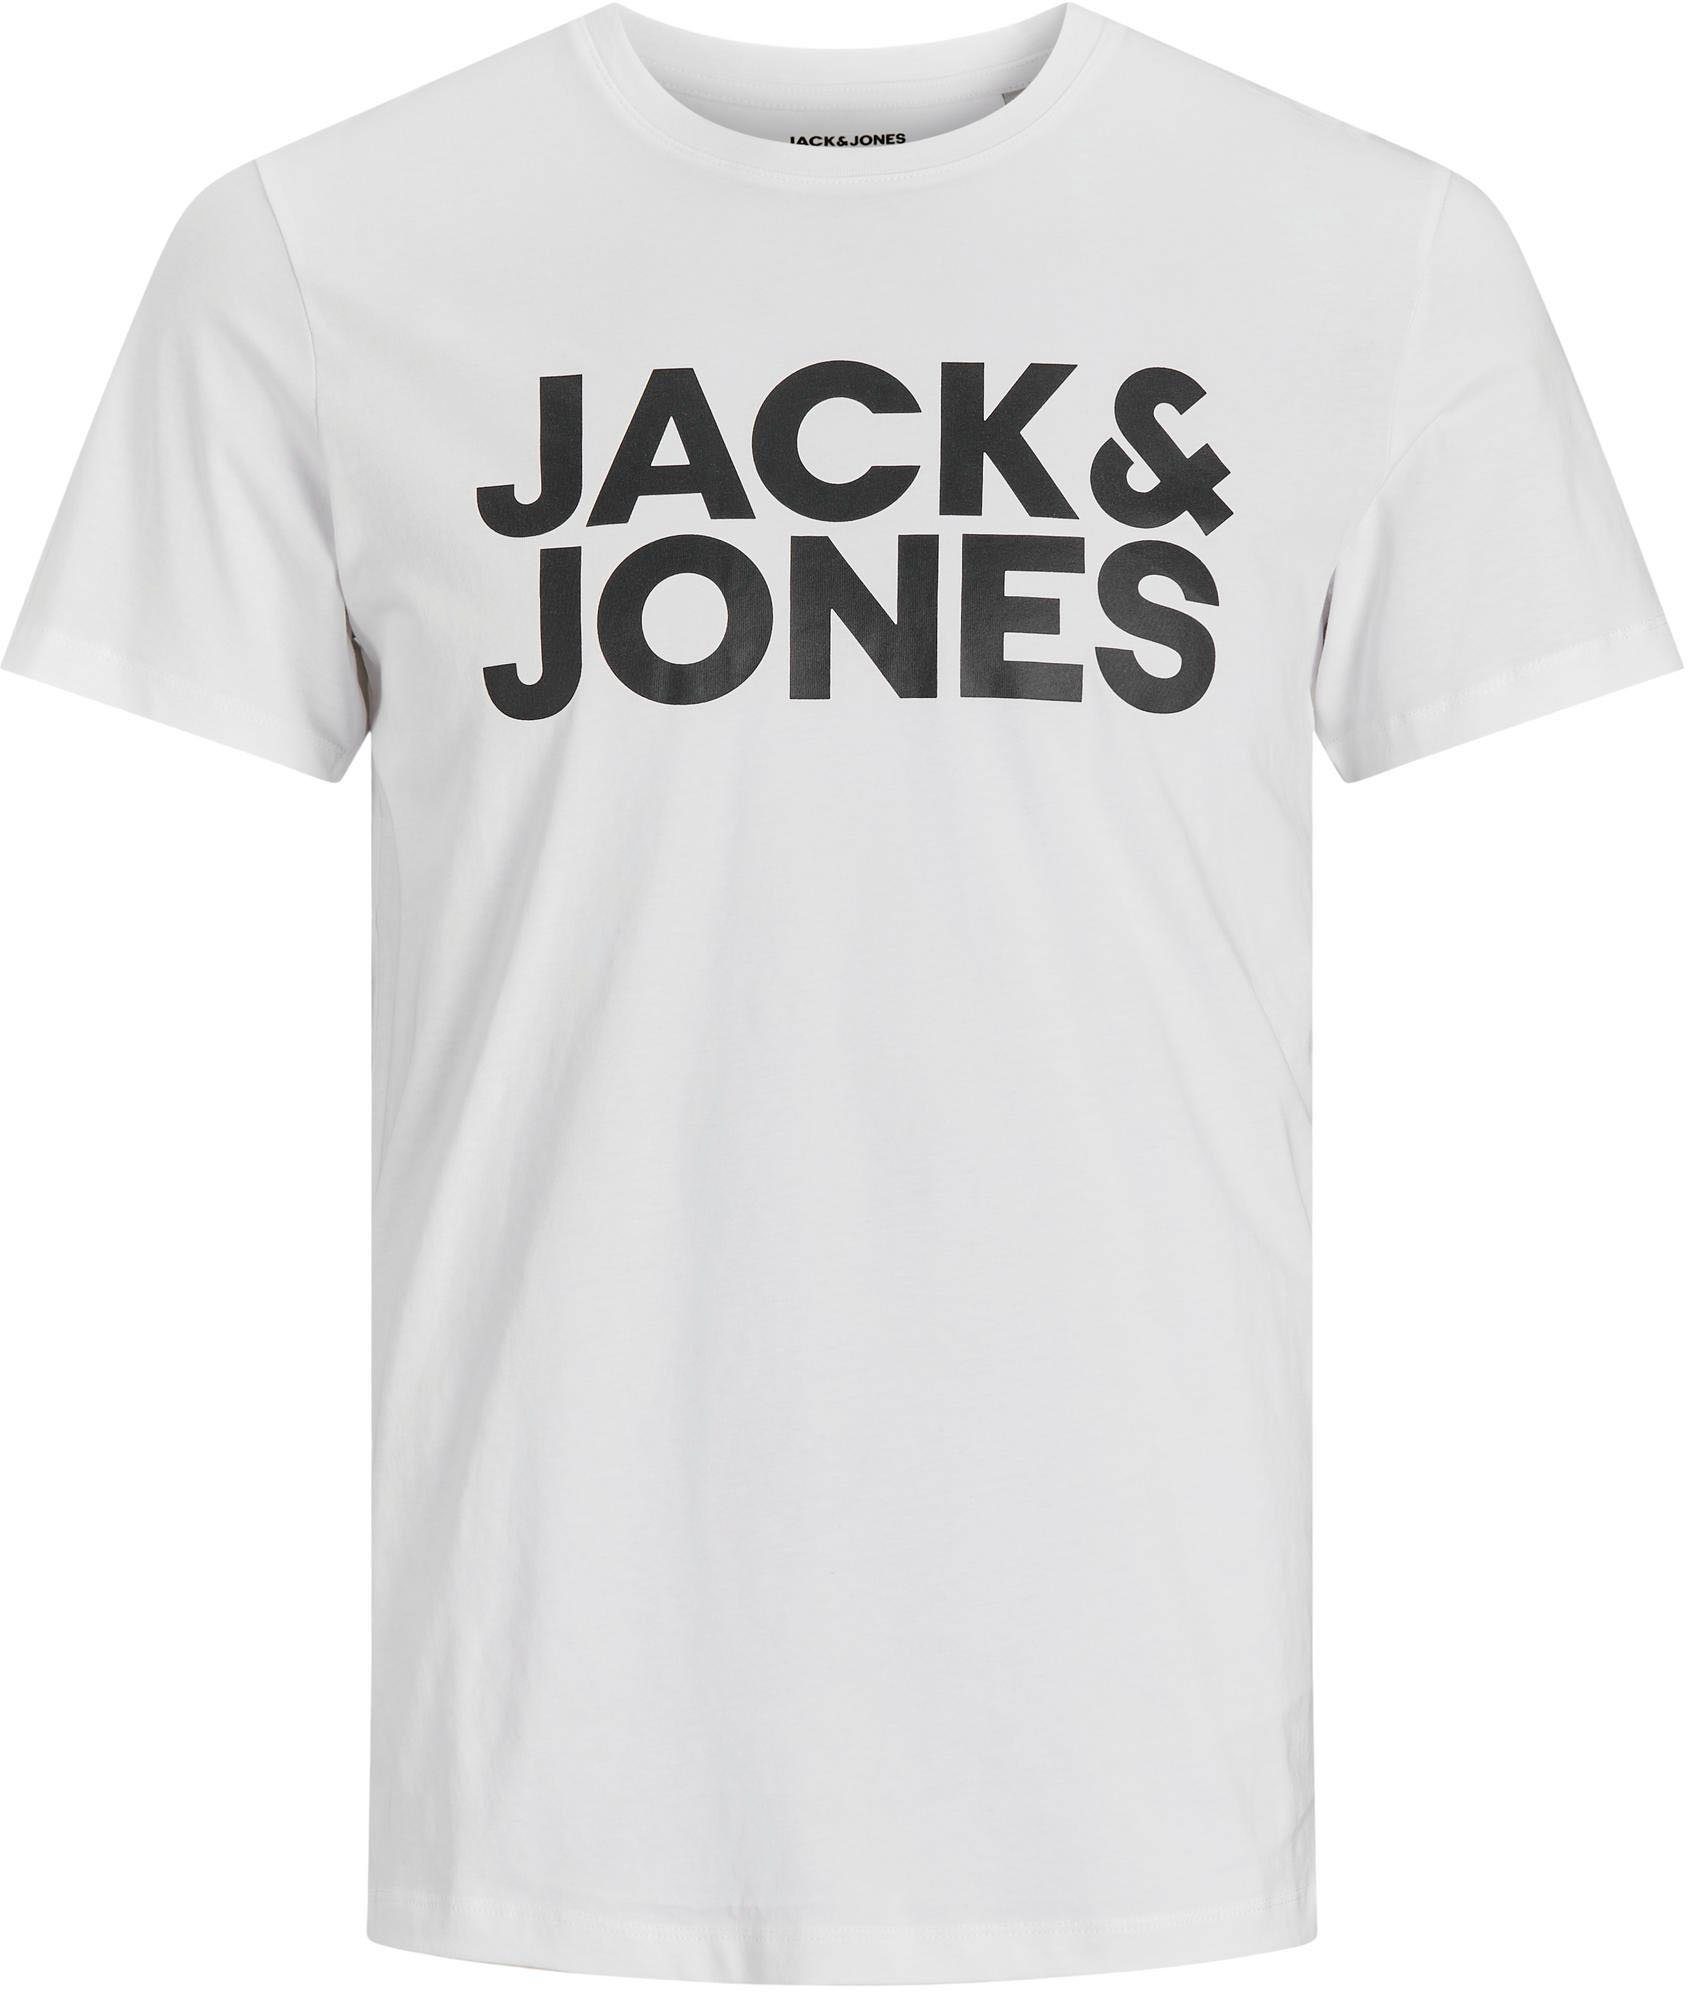 T-Shirt TEE LOGO CORP Jones Logoprint Jack & white mit